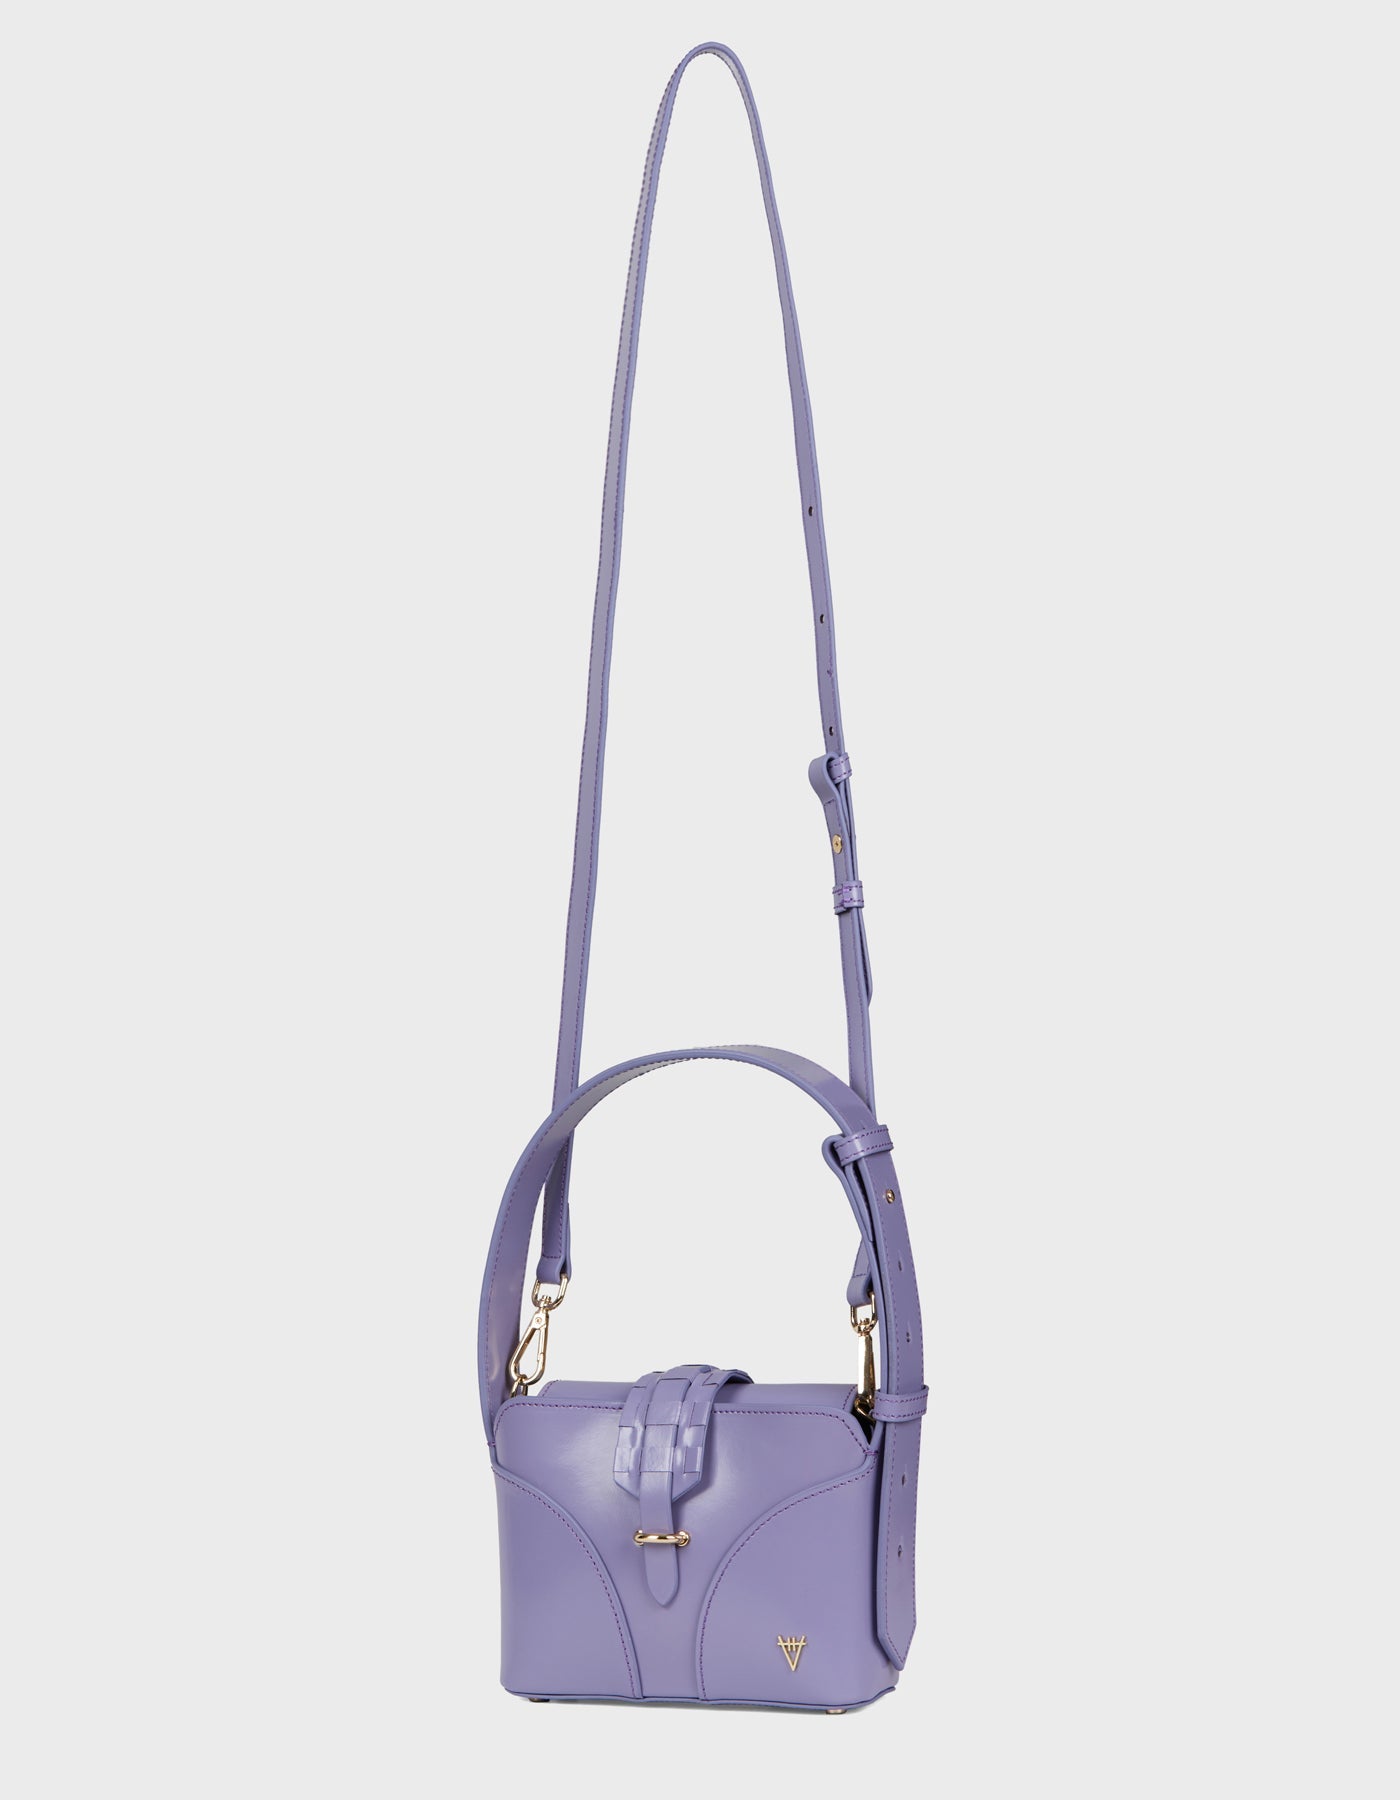 HiVa Atelier | Luna Shoulder Bag Lavender Silk | Beautiful and Versatile